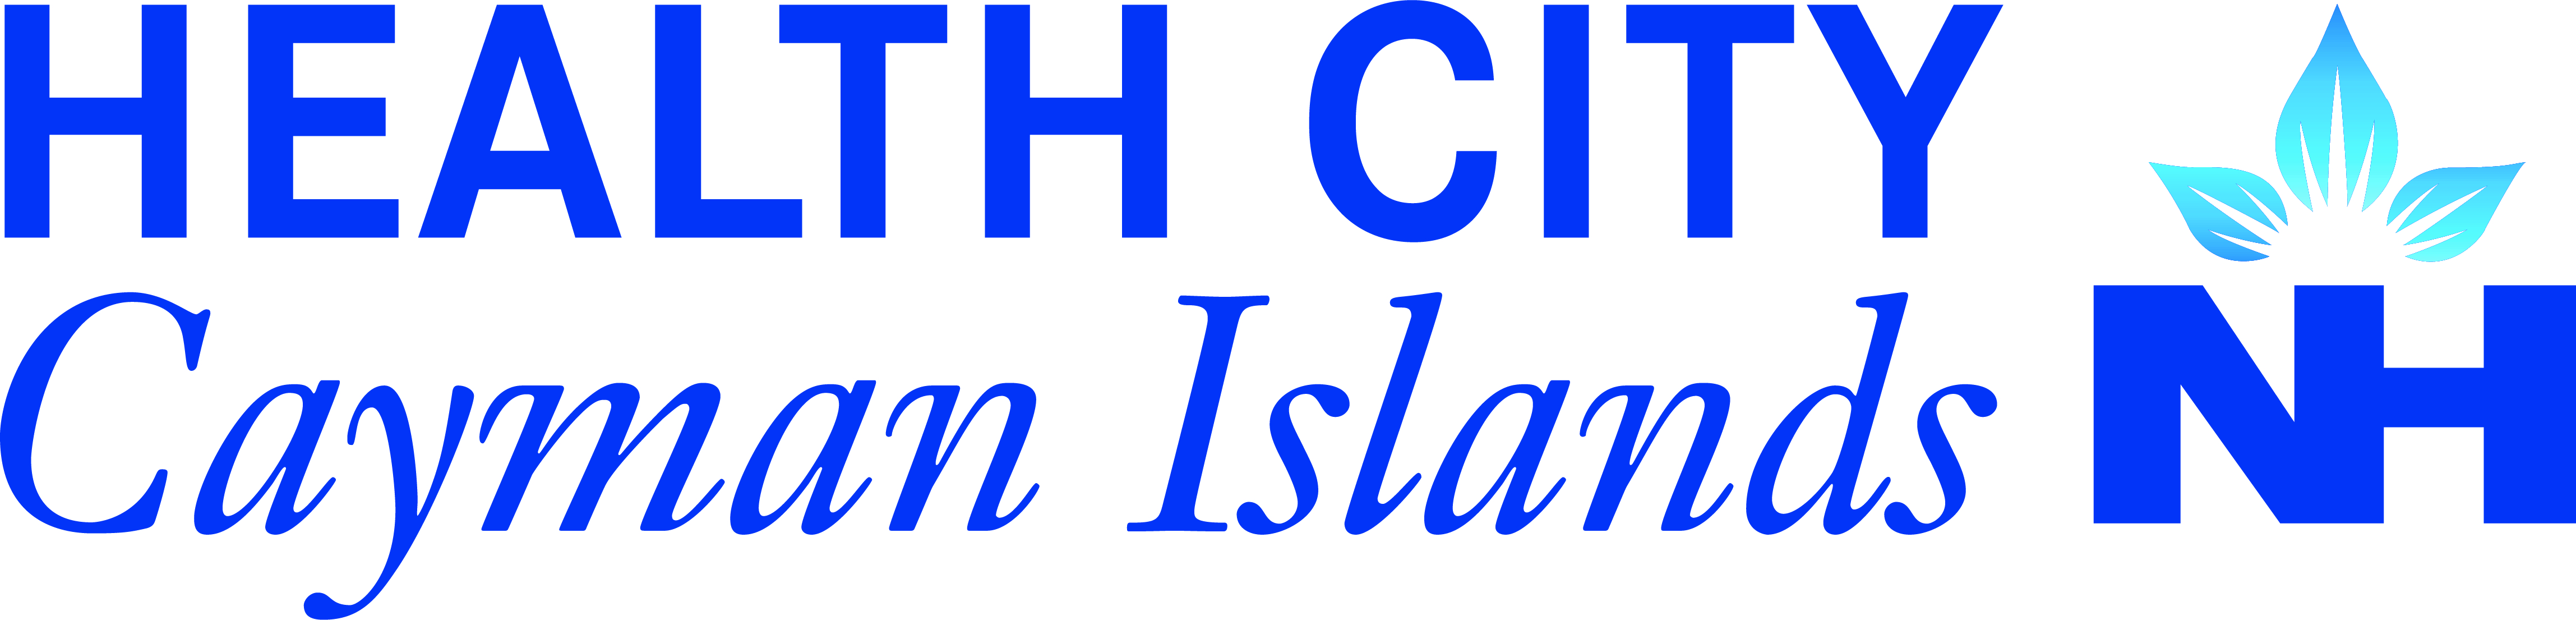 Health City Cayman Islands